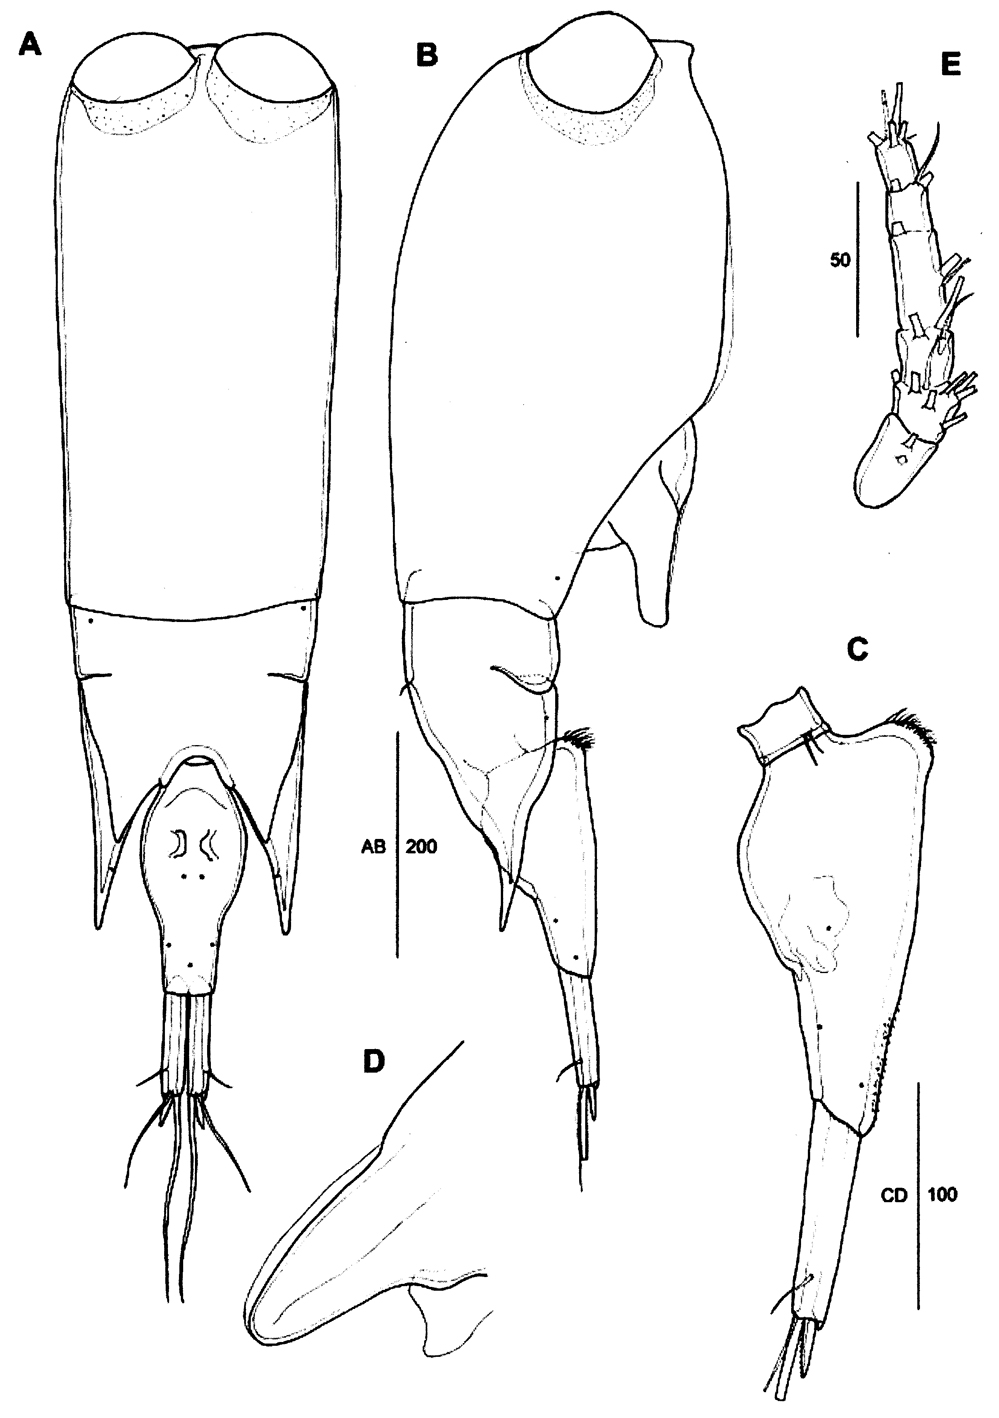 Species Farranula carinata - Plate 12 of morphological figures